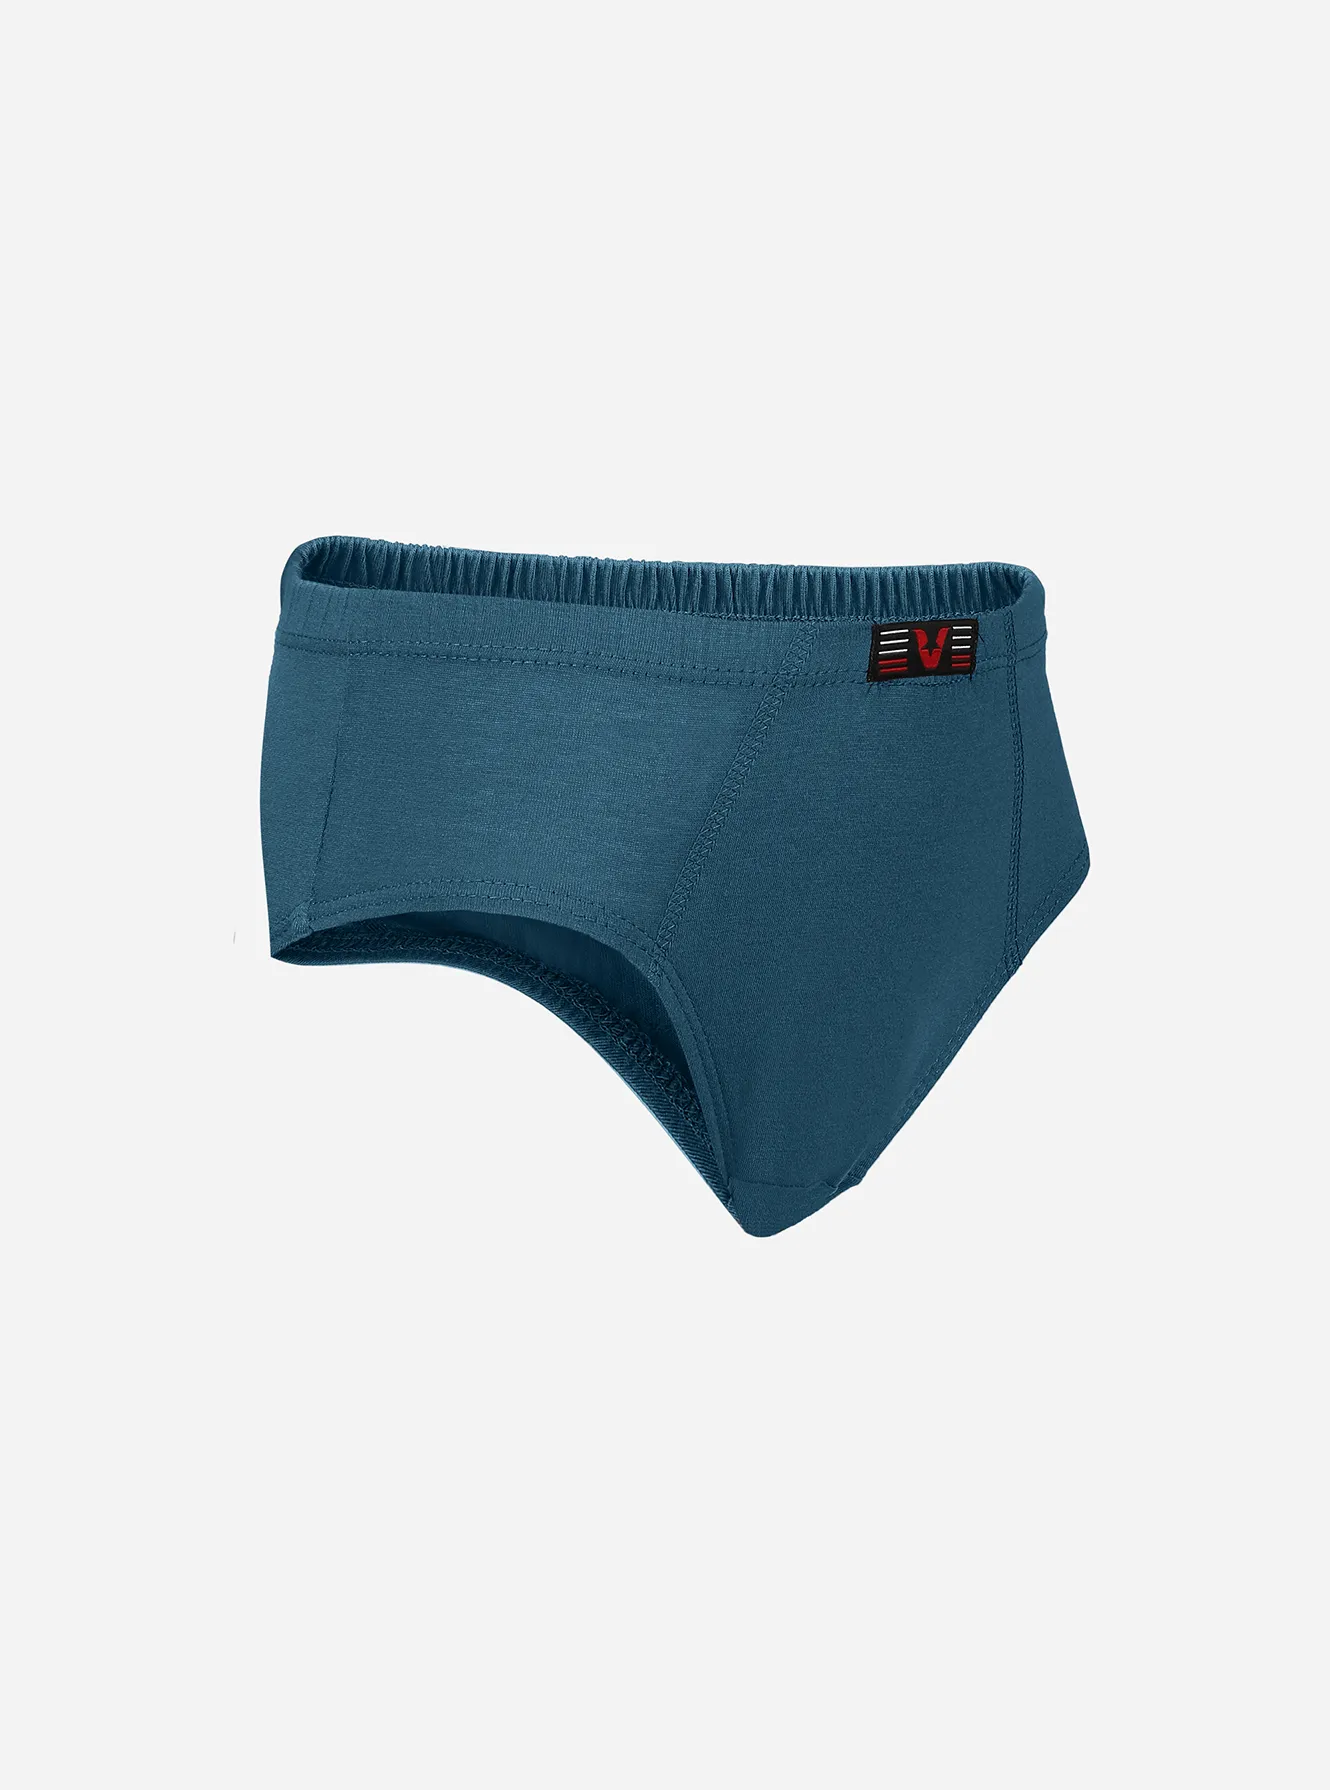 Buy Men Padded Underwear SLIP Online in India 